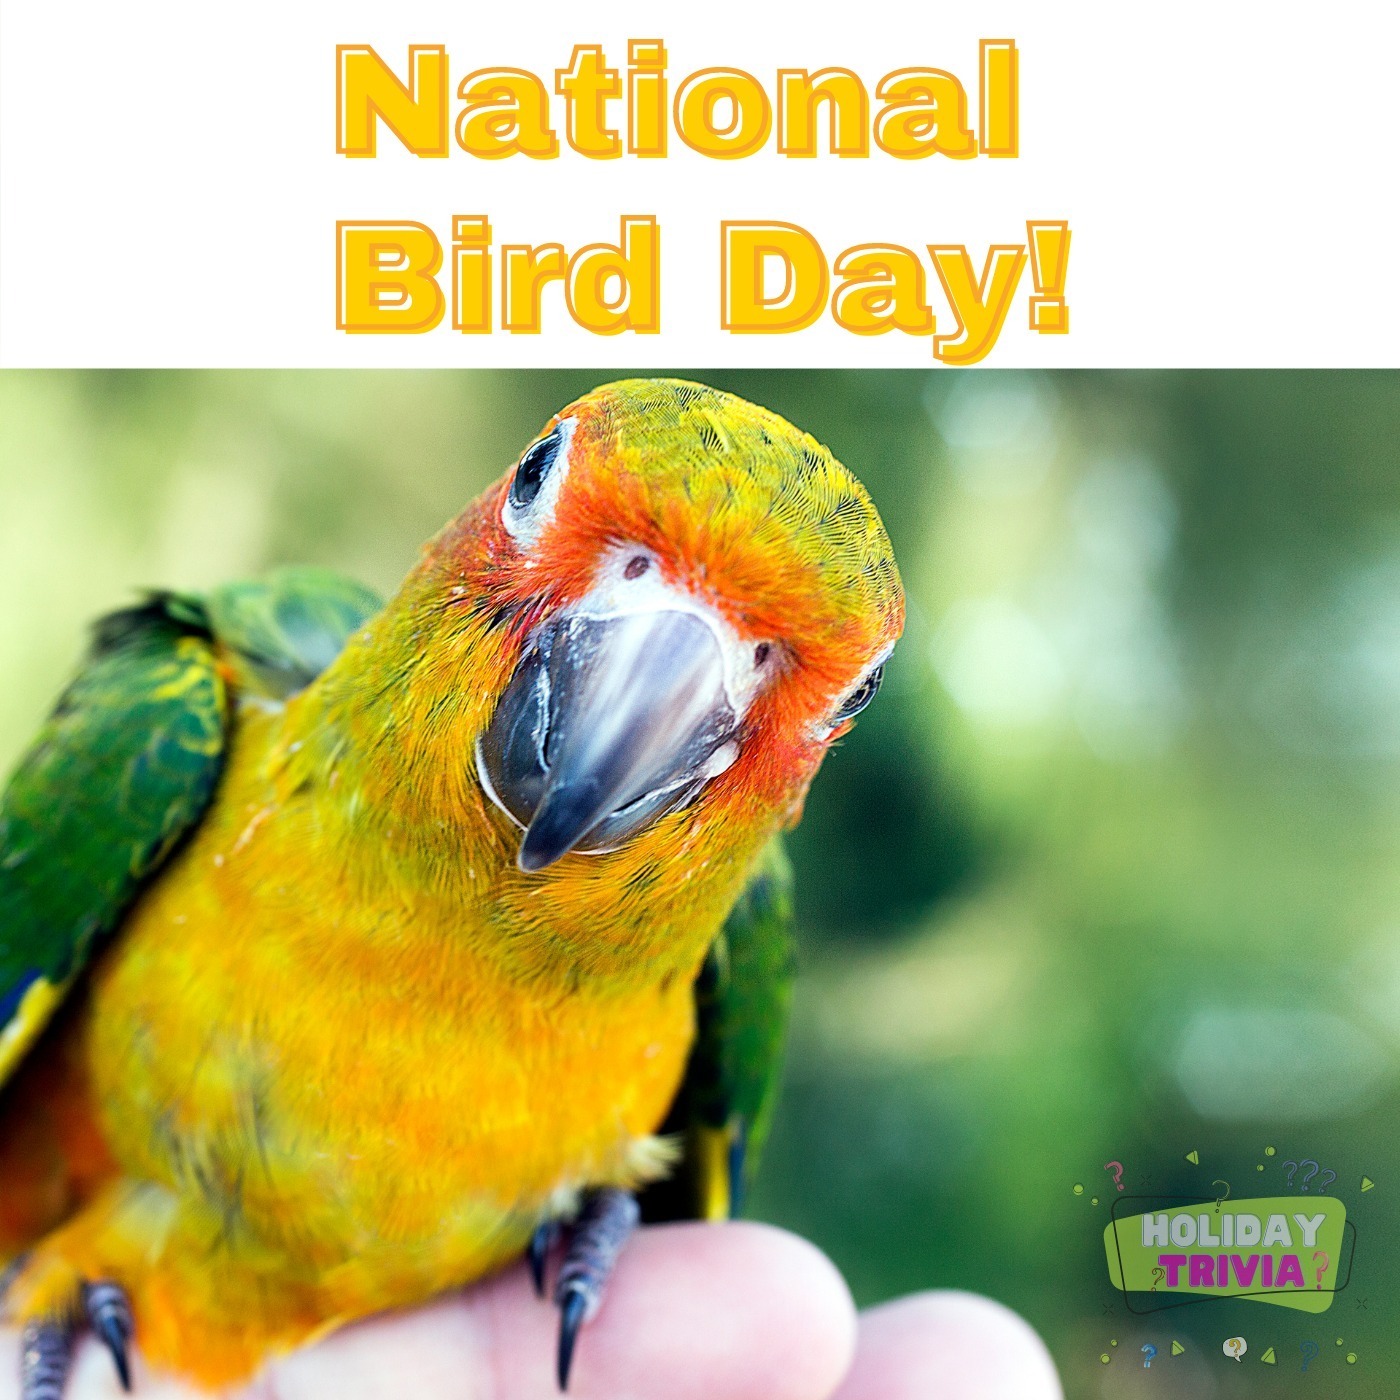 Episode #057 National Bird Day!